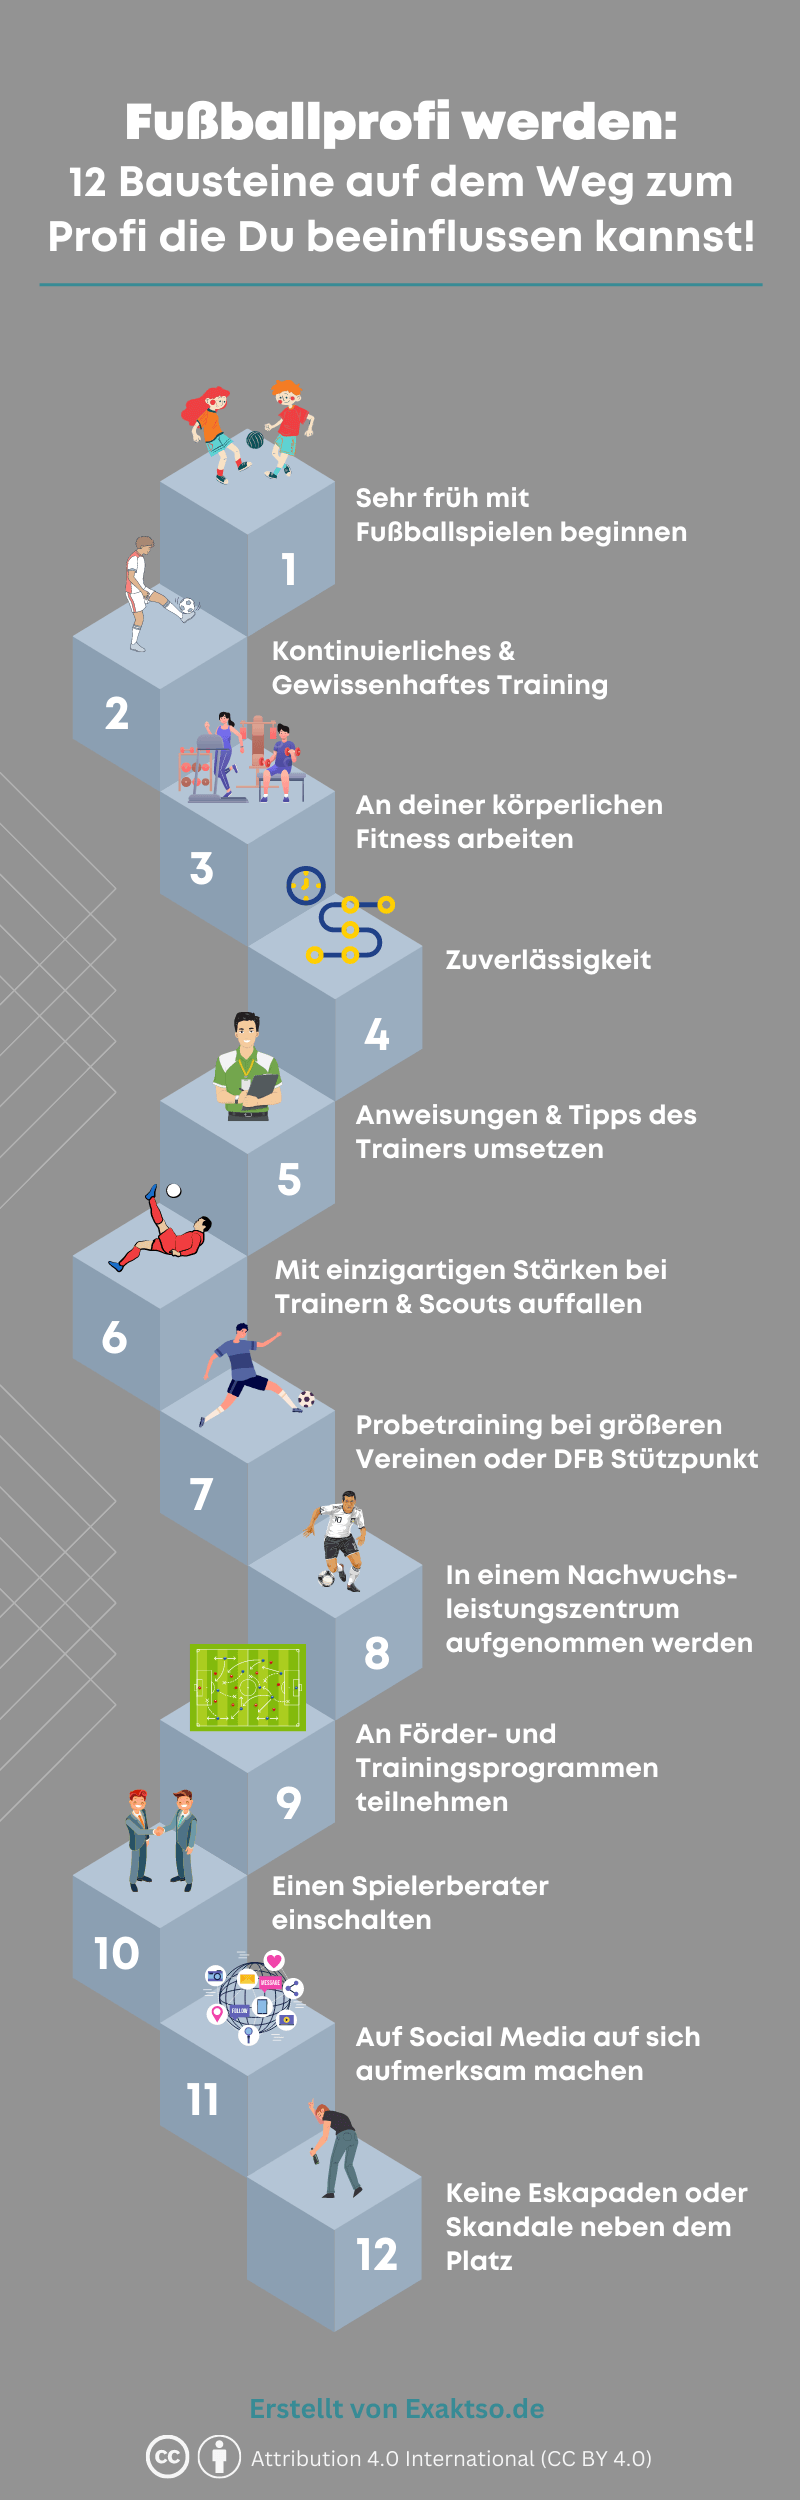 Fußballprofi werden Tipps - Infografik - Exaktso.de